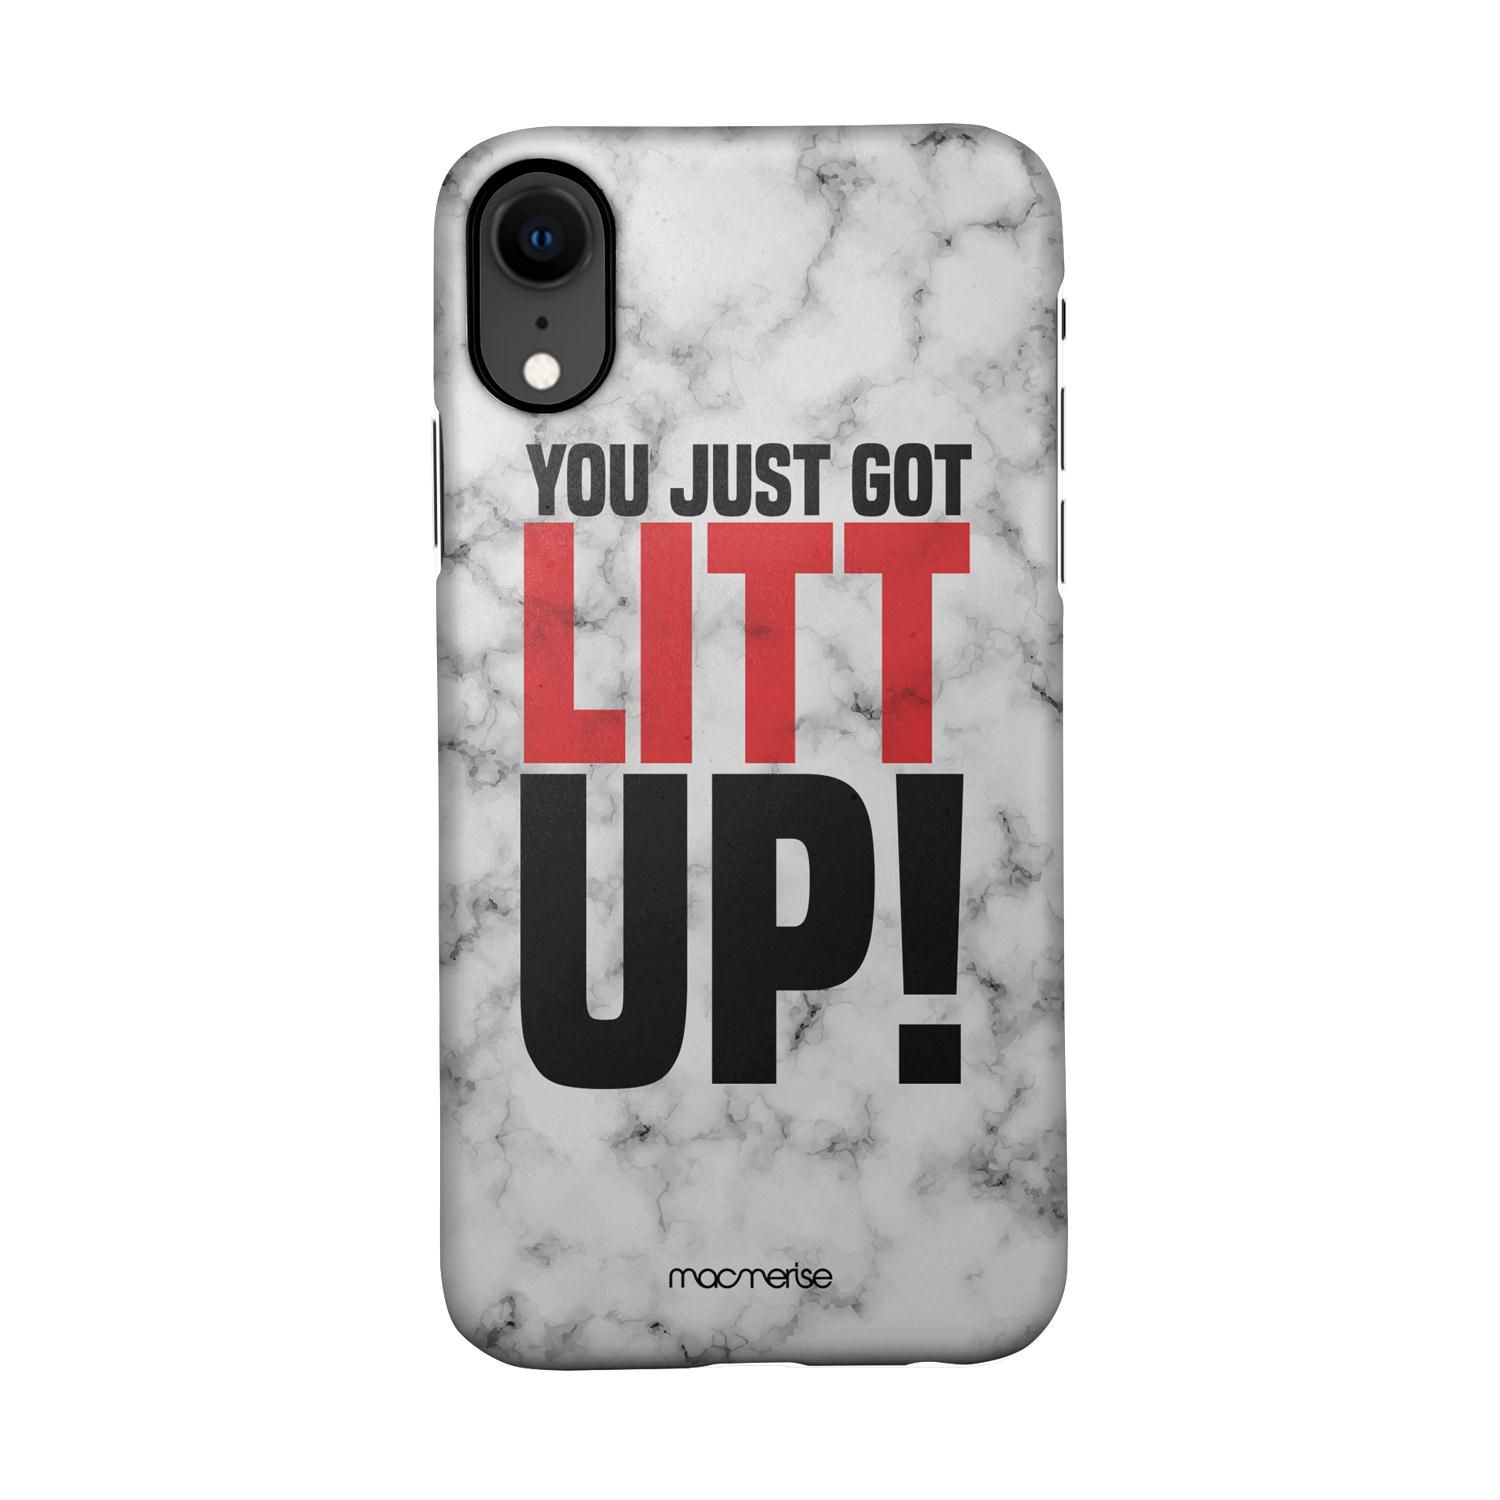 Buy Litt Up - Sleek Phone Case for iPhone XR Online